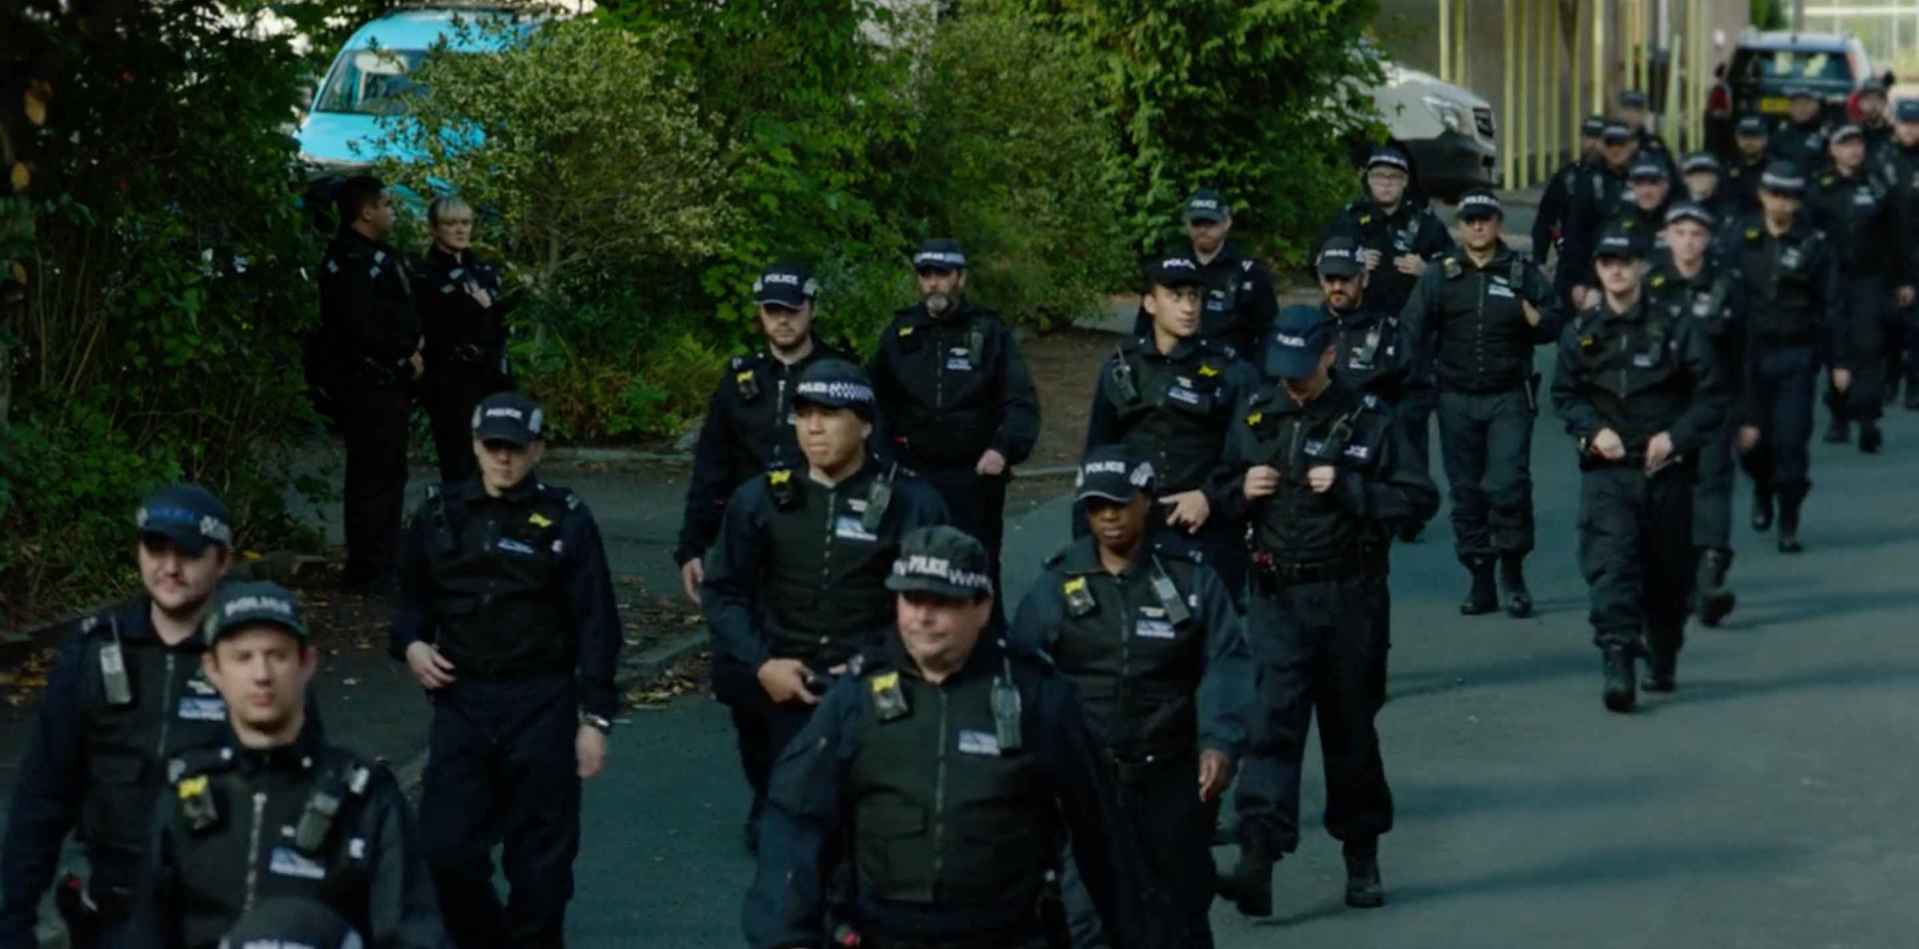 Sherwood Hundreds of police officers deploy in Ashfield